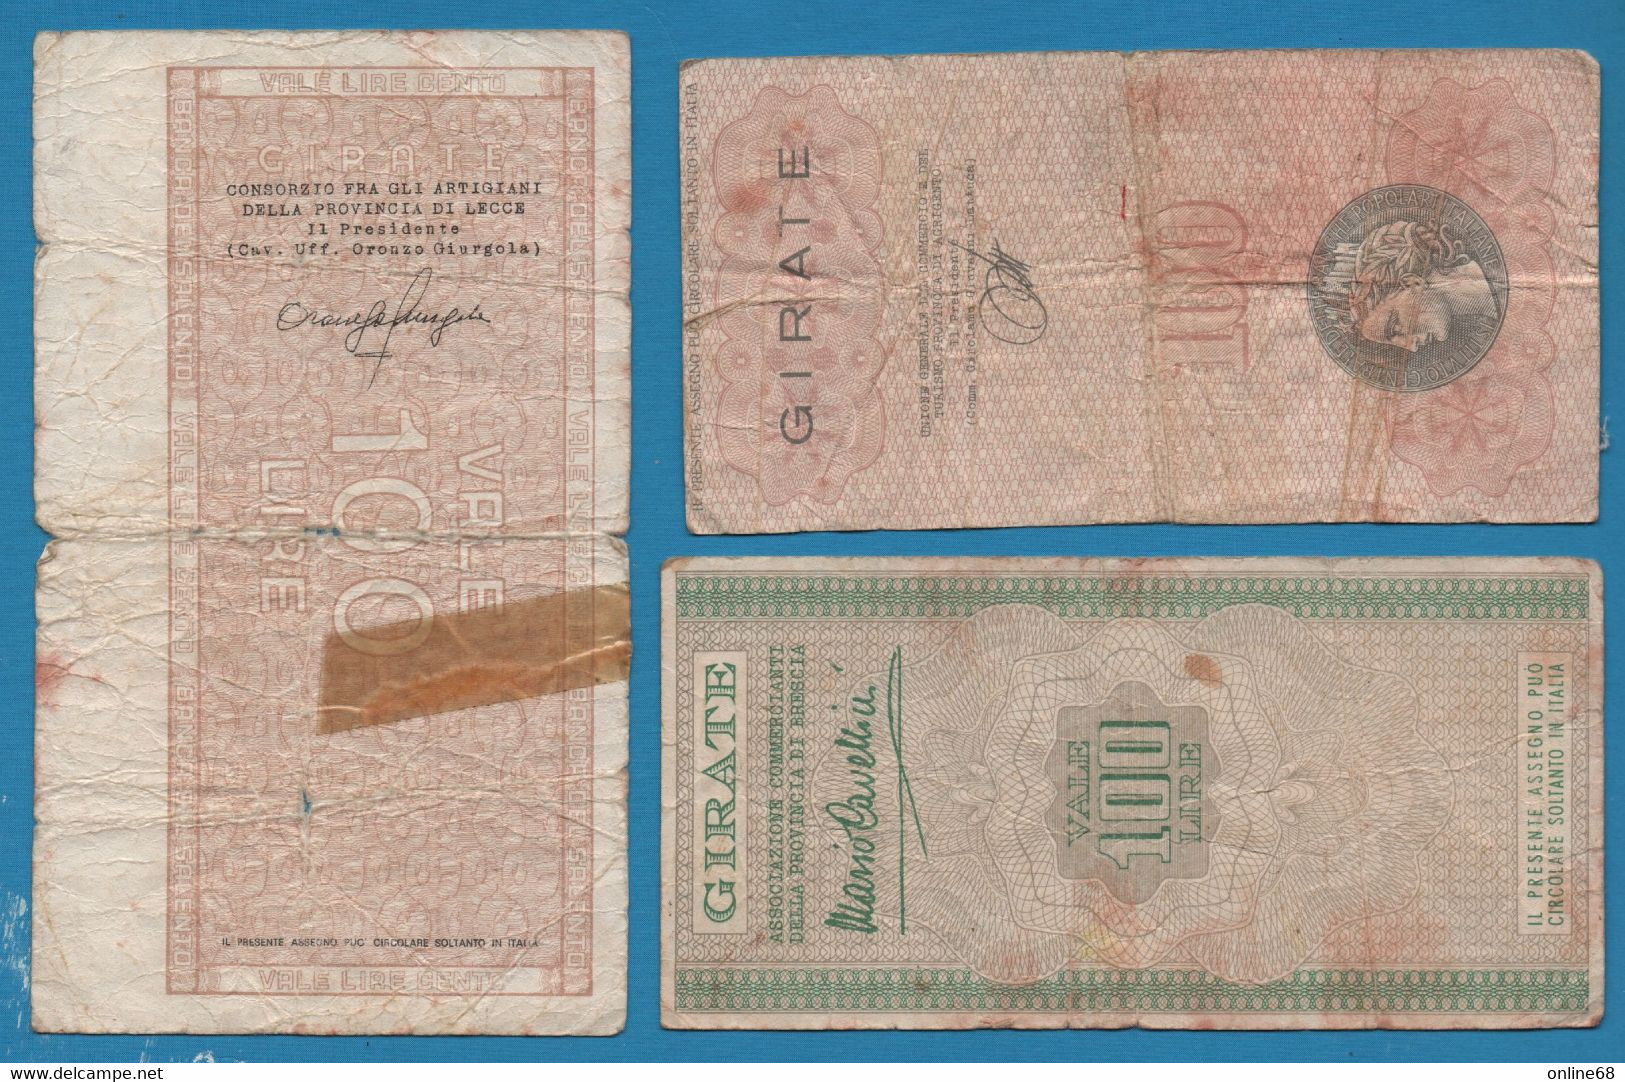 ITALIA ASSEGNO GIRATE ITALIANO LOT 3 NOTES 1976-1977 - Lots & Kiloware - Banknotes